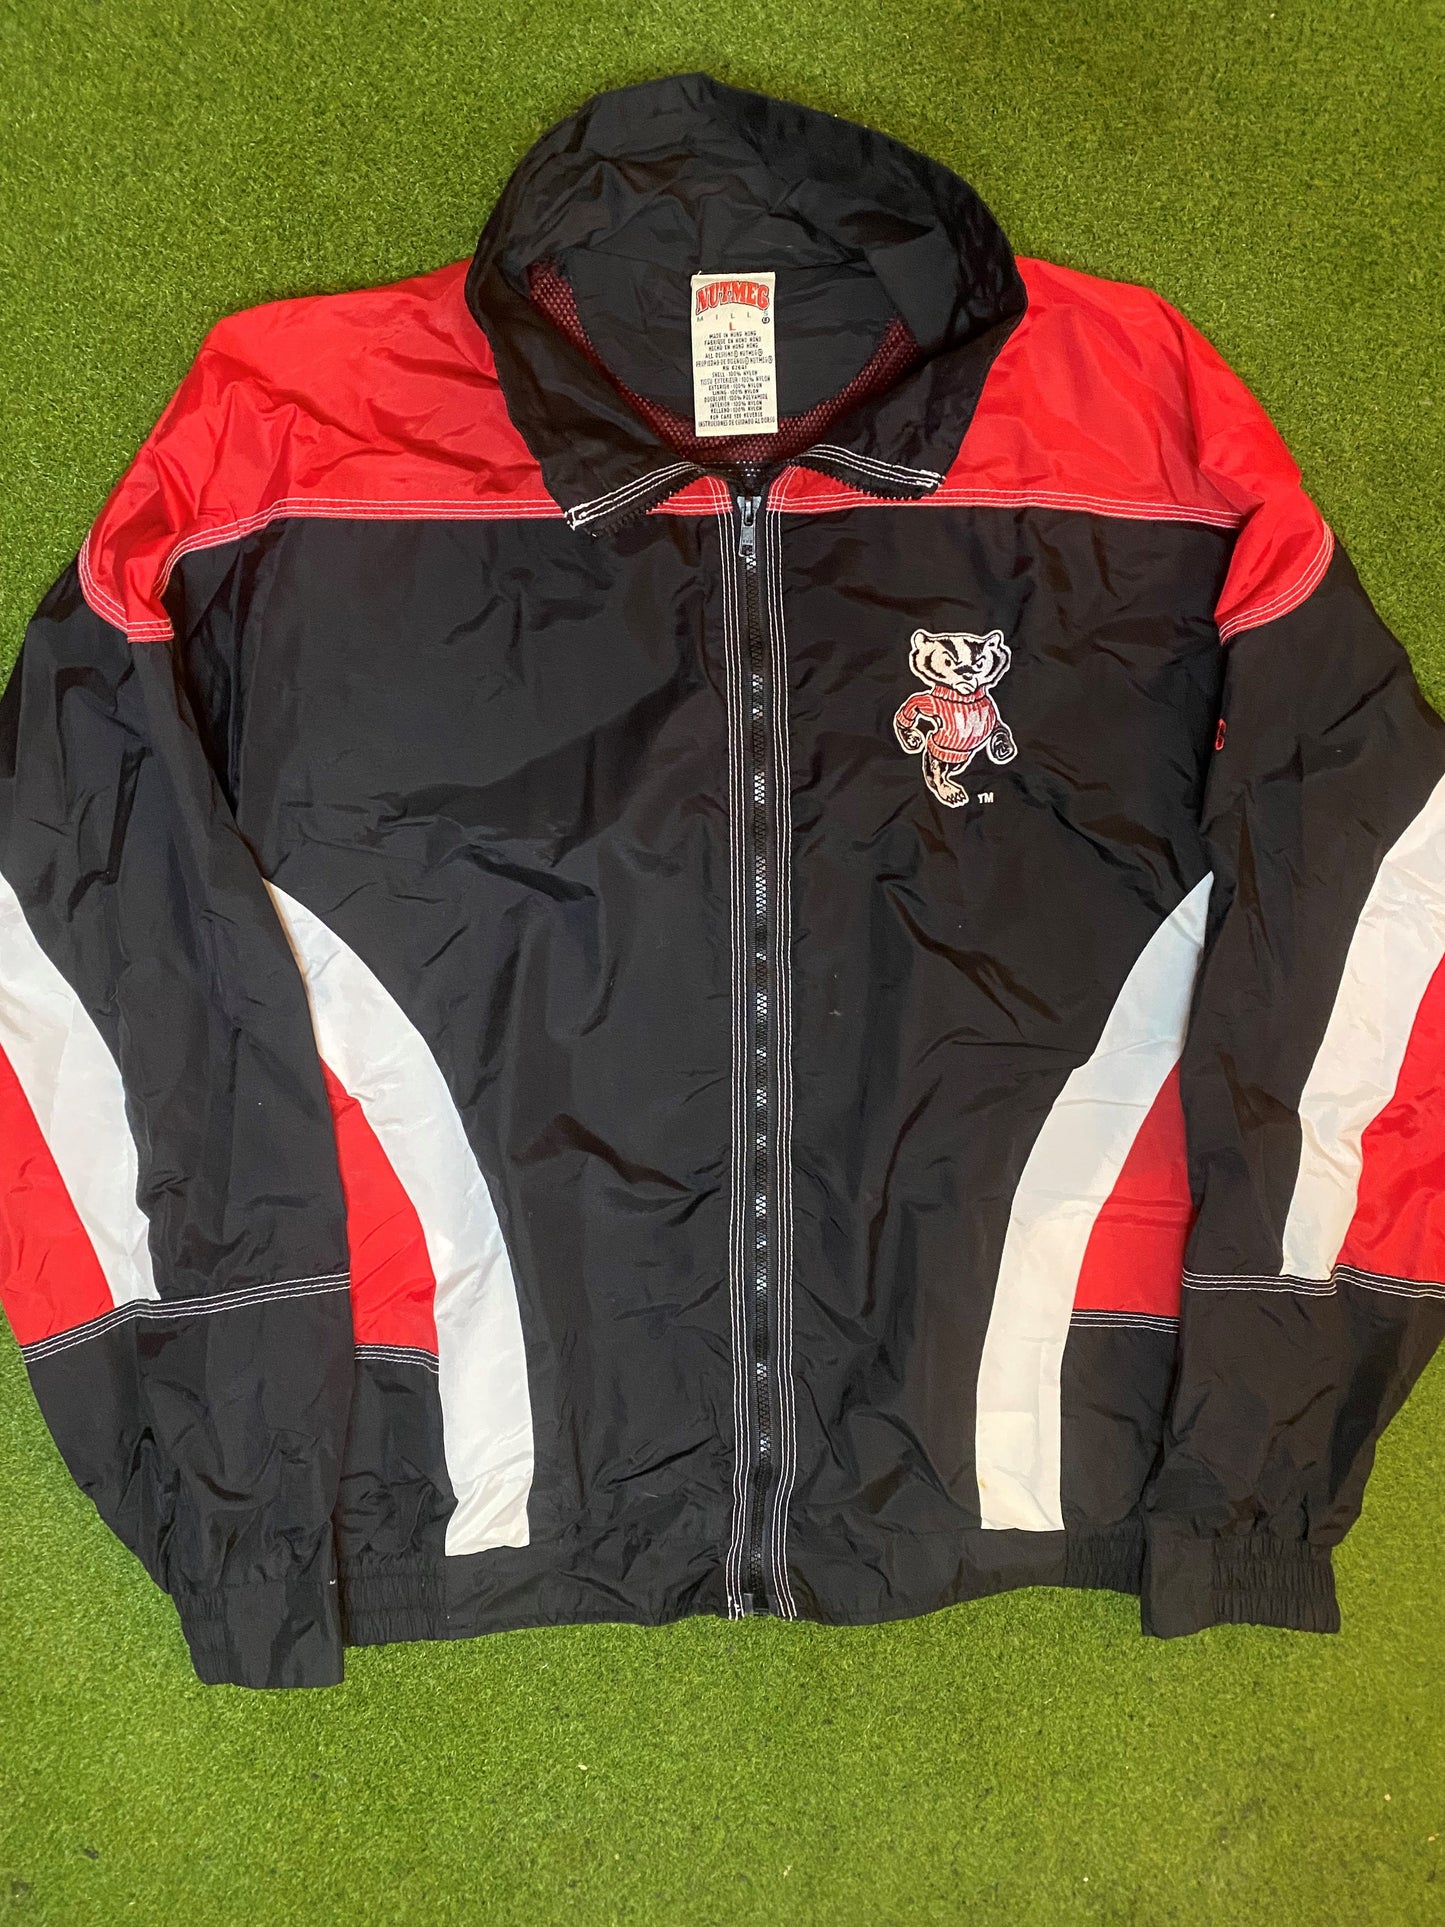 90s Wisconsin Badgers - Vintage College Jacket (Large)